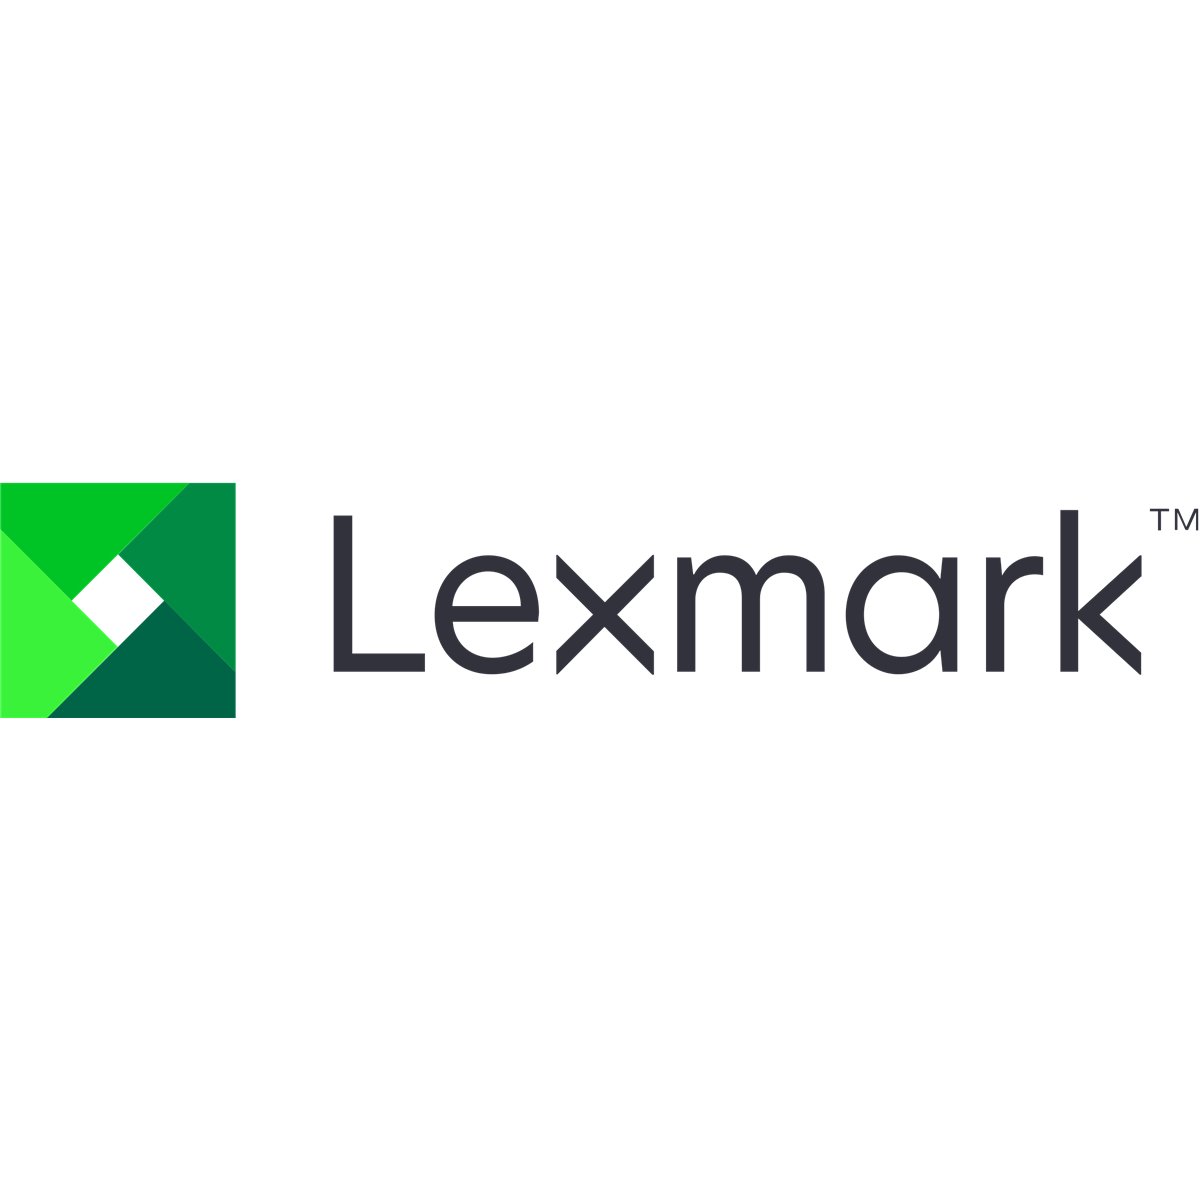 Lexmark Controller Card Ldn